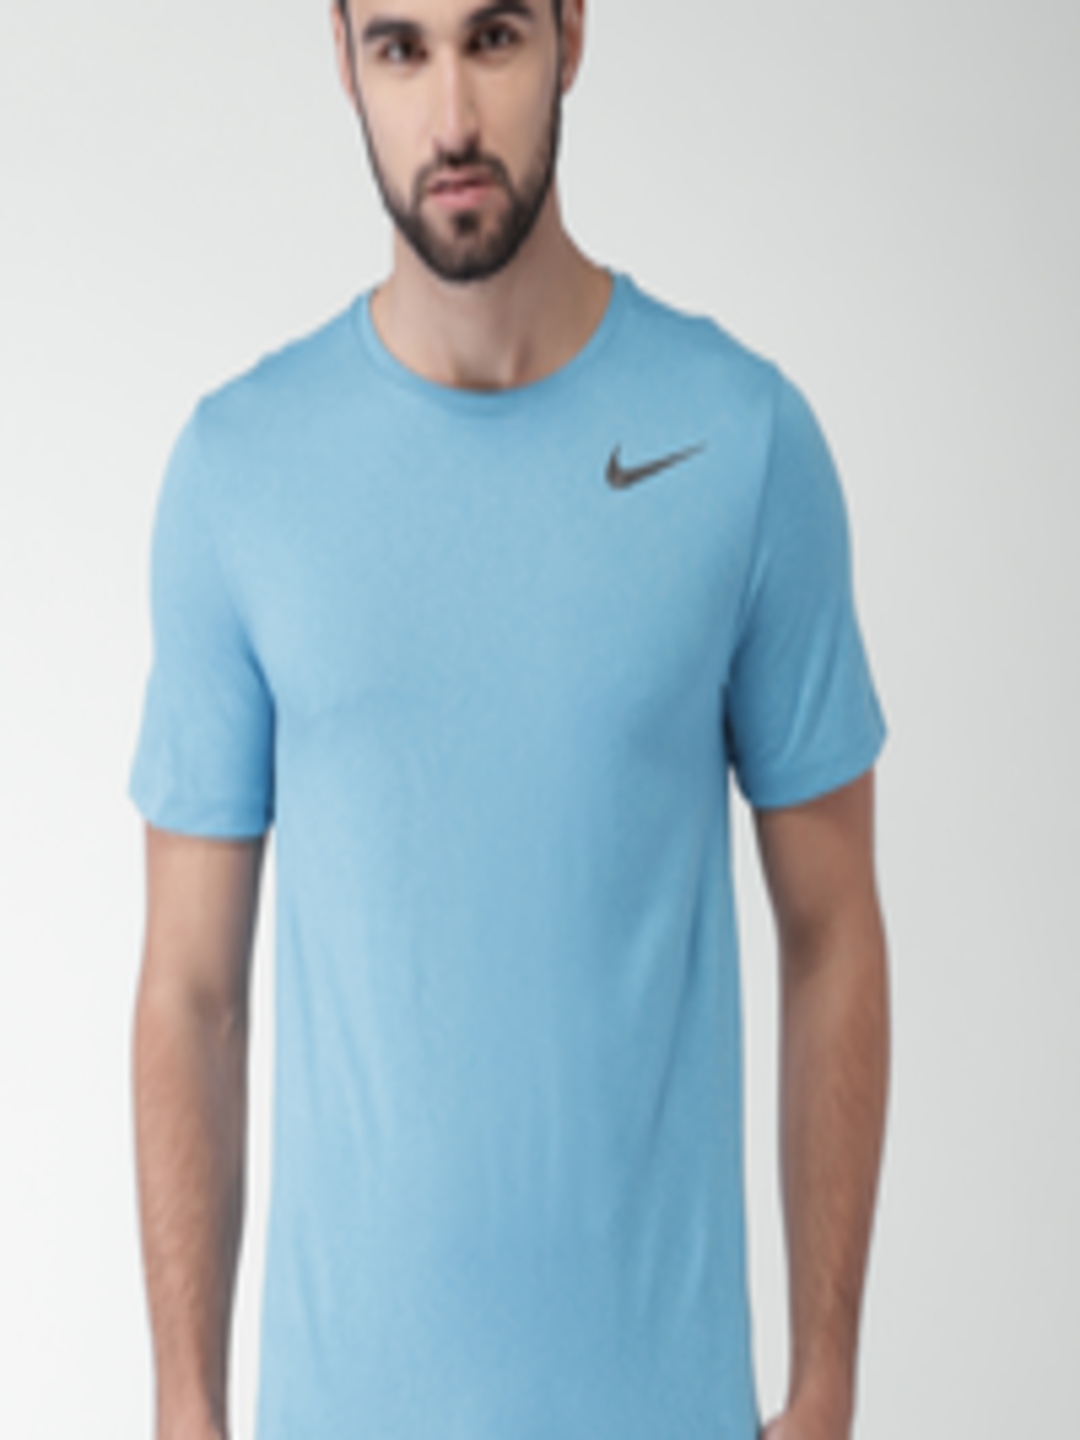 Buy Nike Teal Blue Standard Fit Sports T Shirt - Tshirts for Men ...